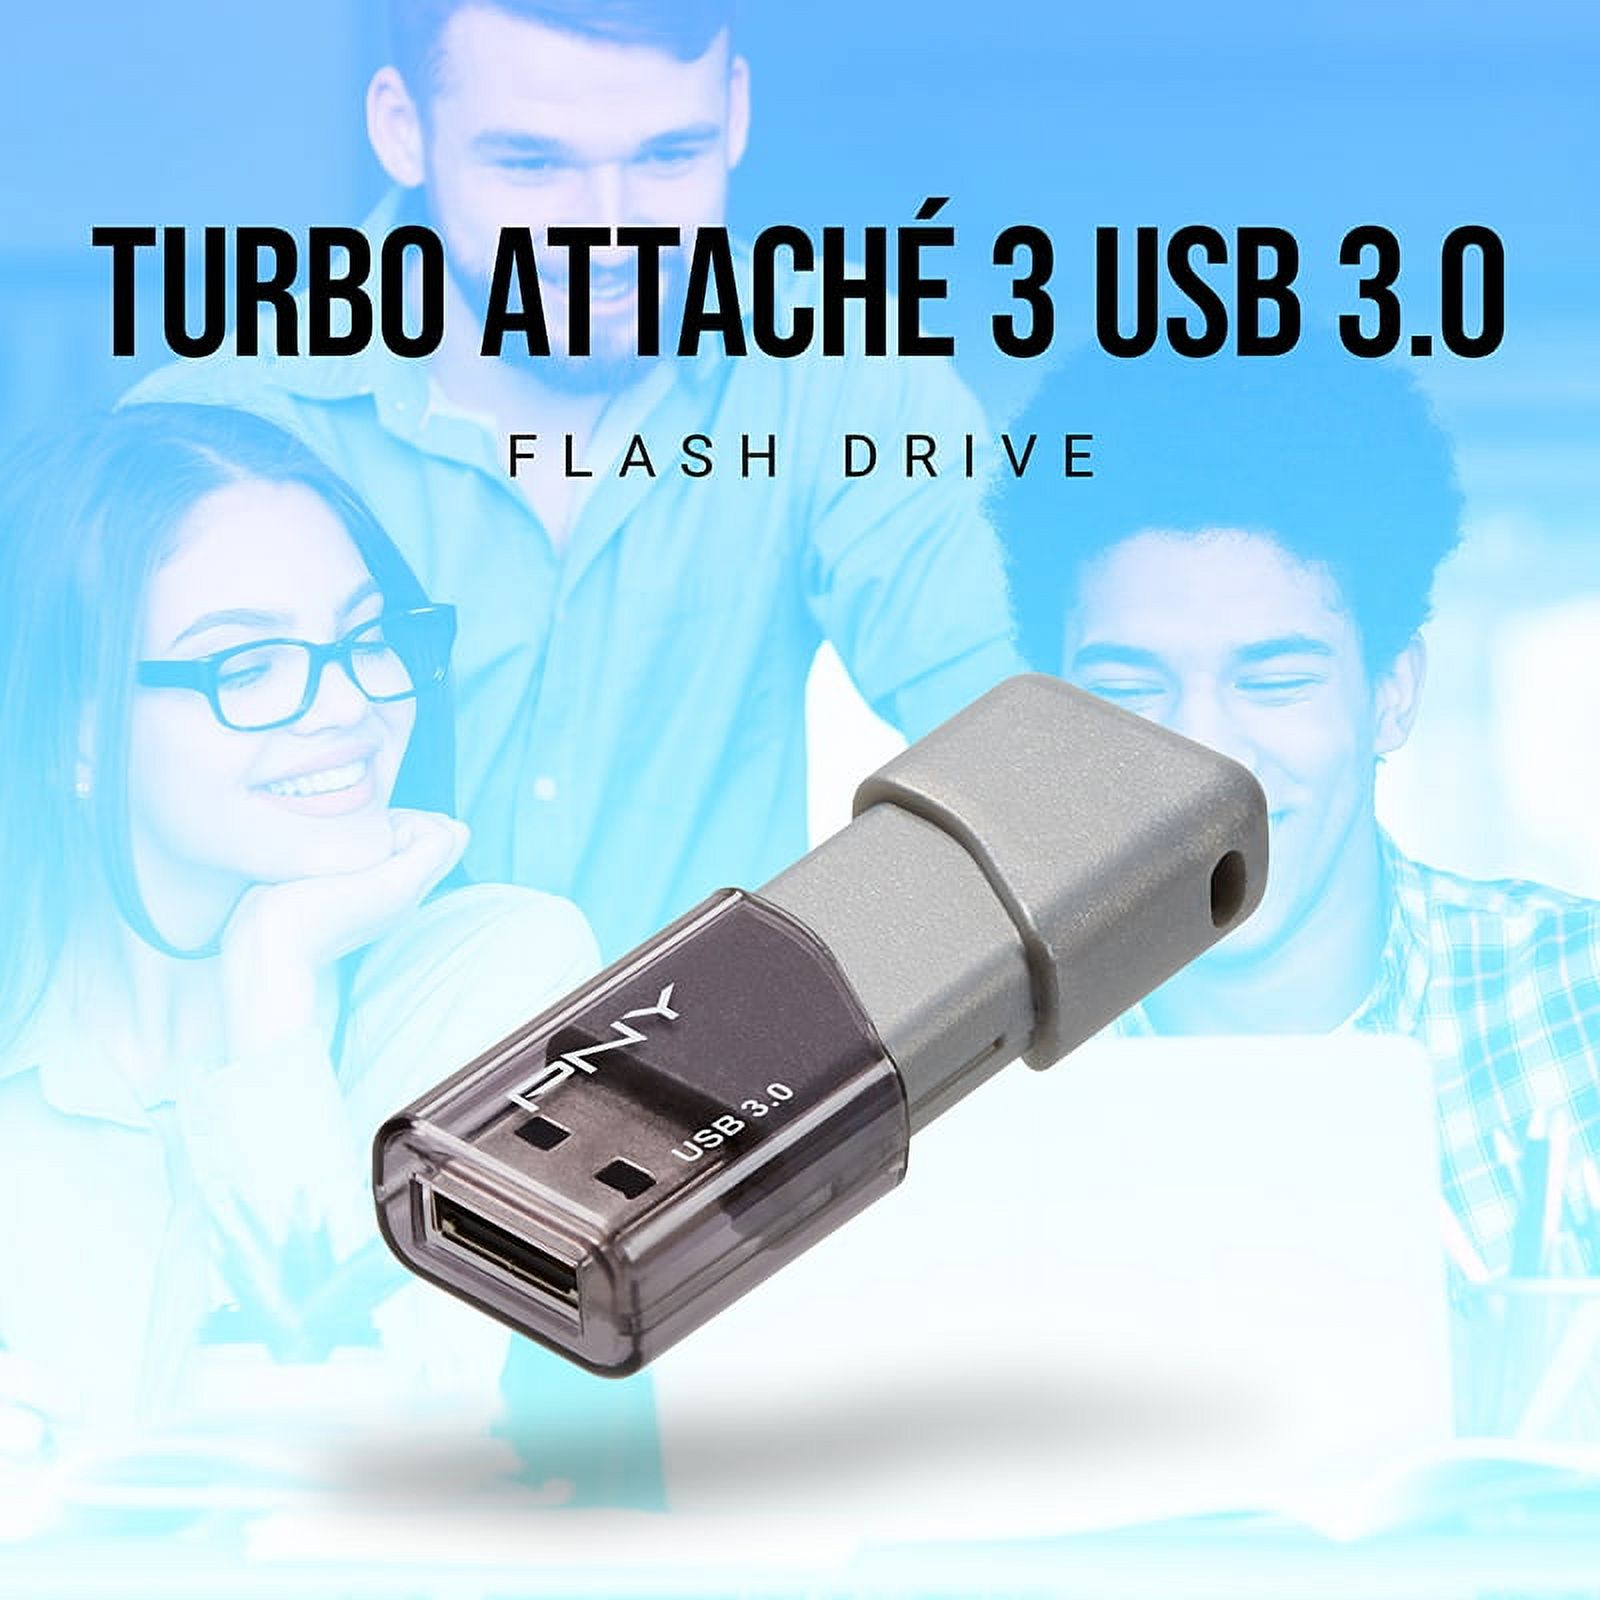 PNY 32GB Turbo Attaché 3 USB 3.0 Flash Drive, 10 Pack - image 3 of 7